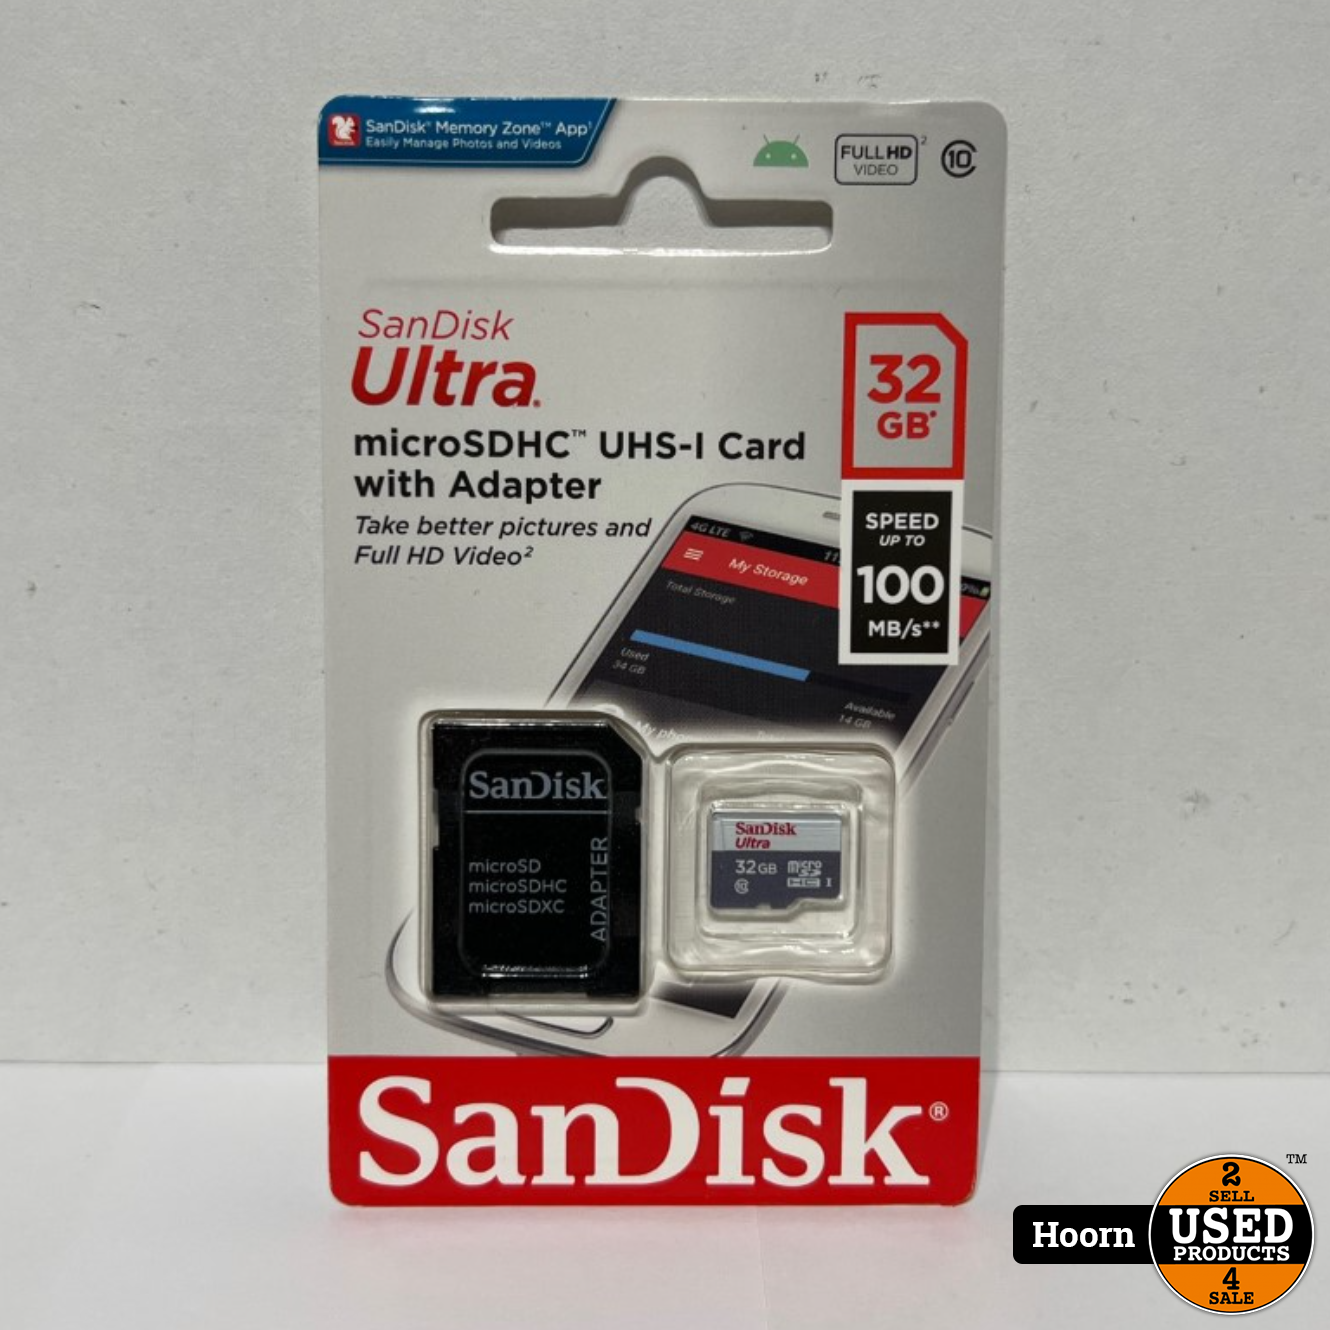 Heiligdom Downtown nakoming SanDisk Ultra MicroSDHC UHS-I Geheugenkaart 32GB Nieuw - Used Products Hoorn